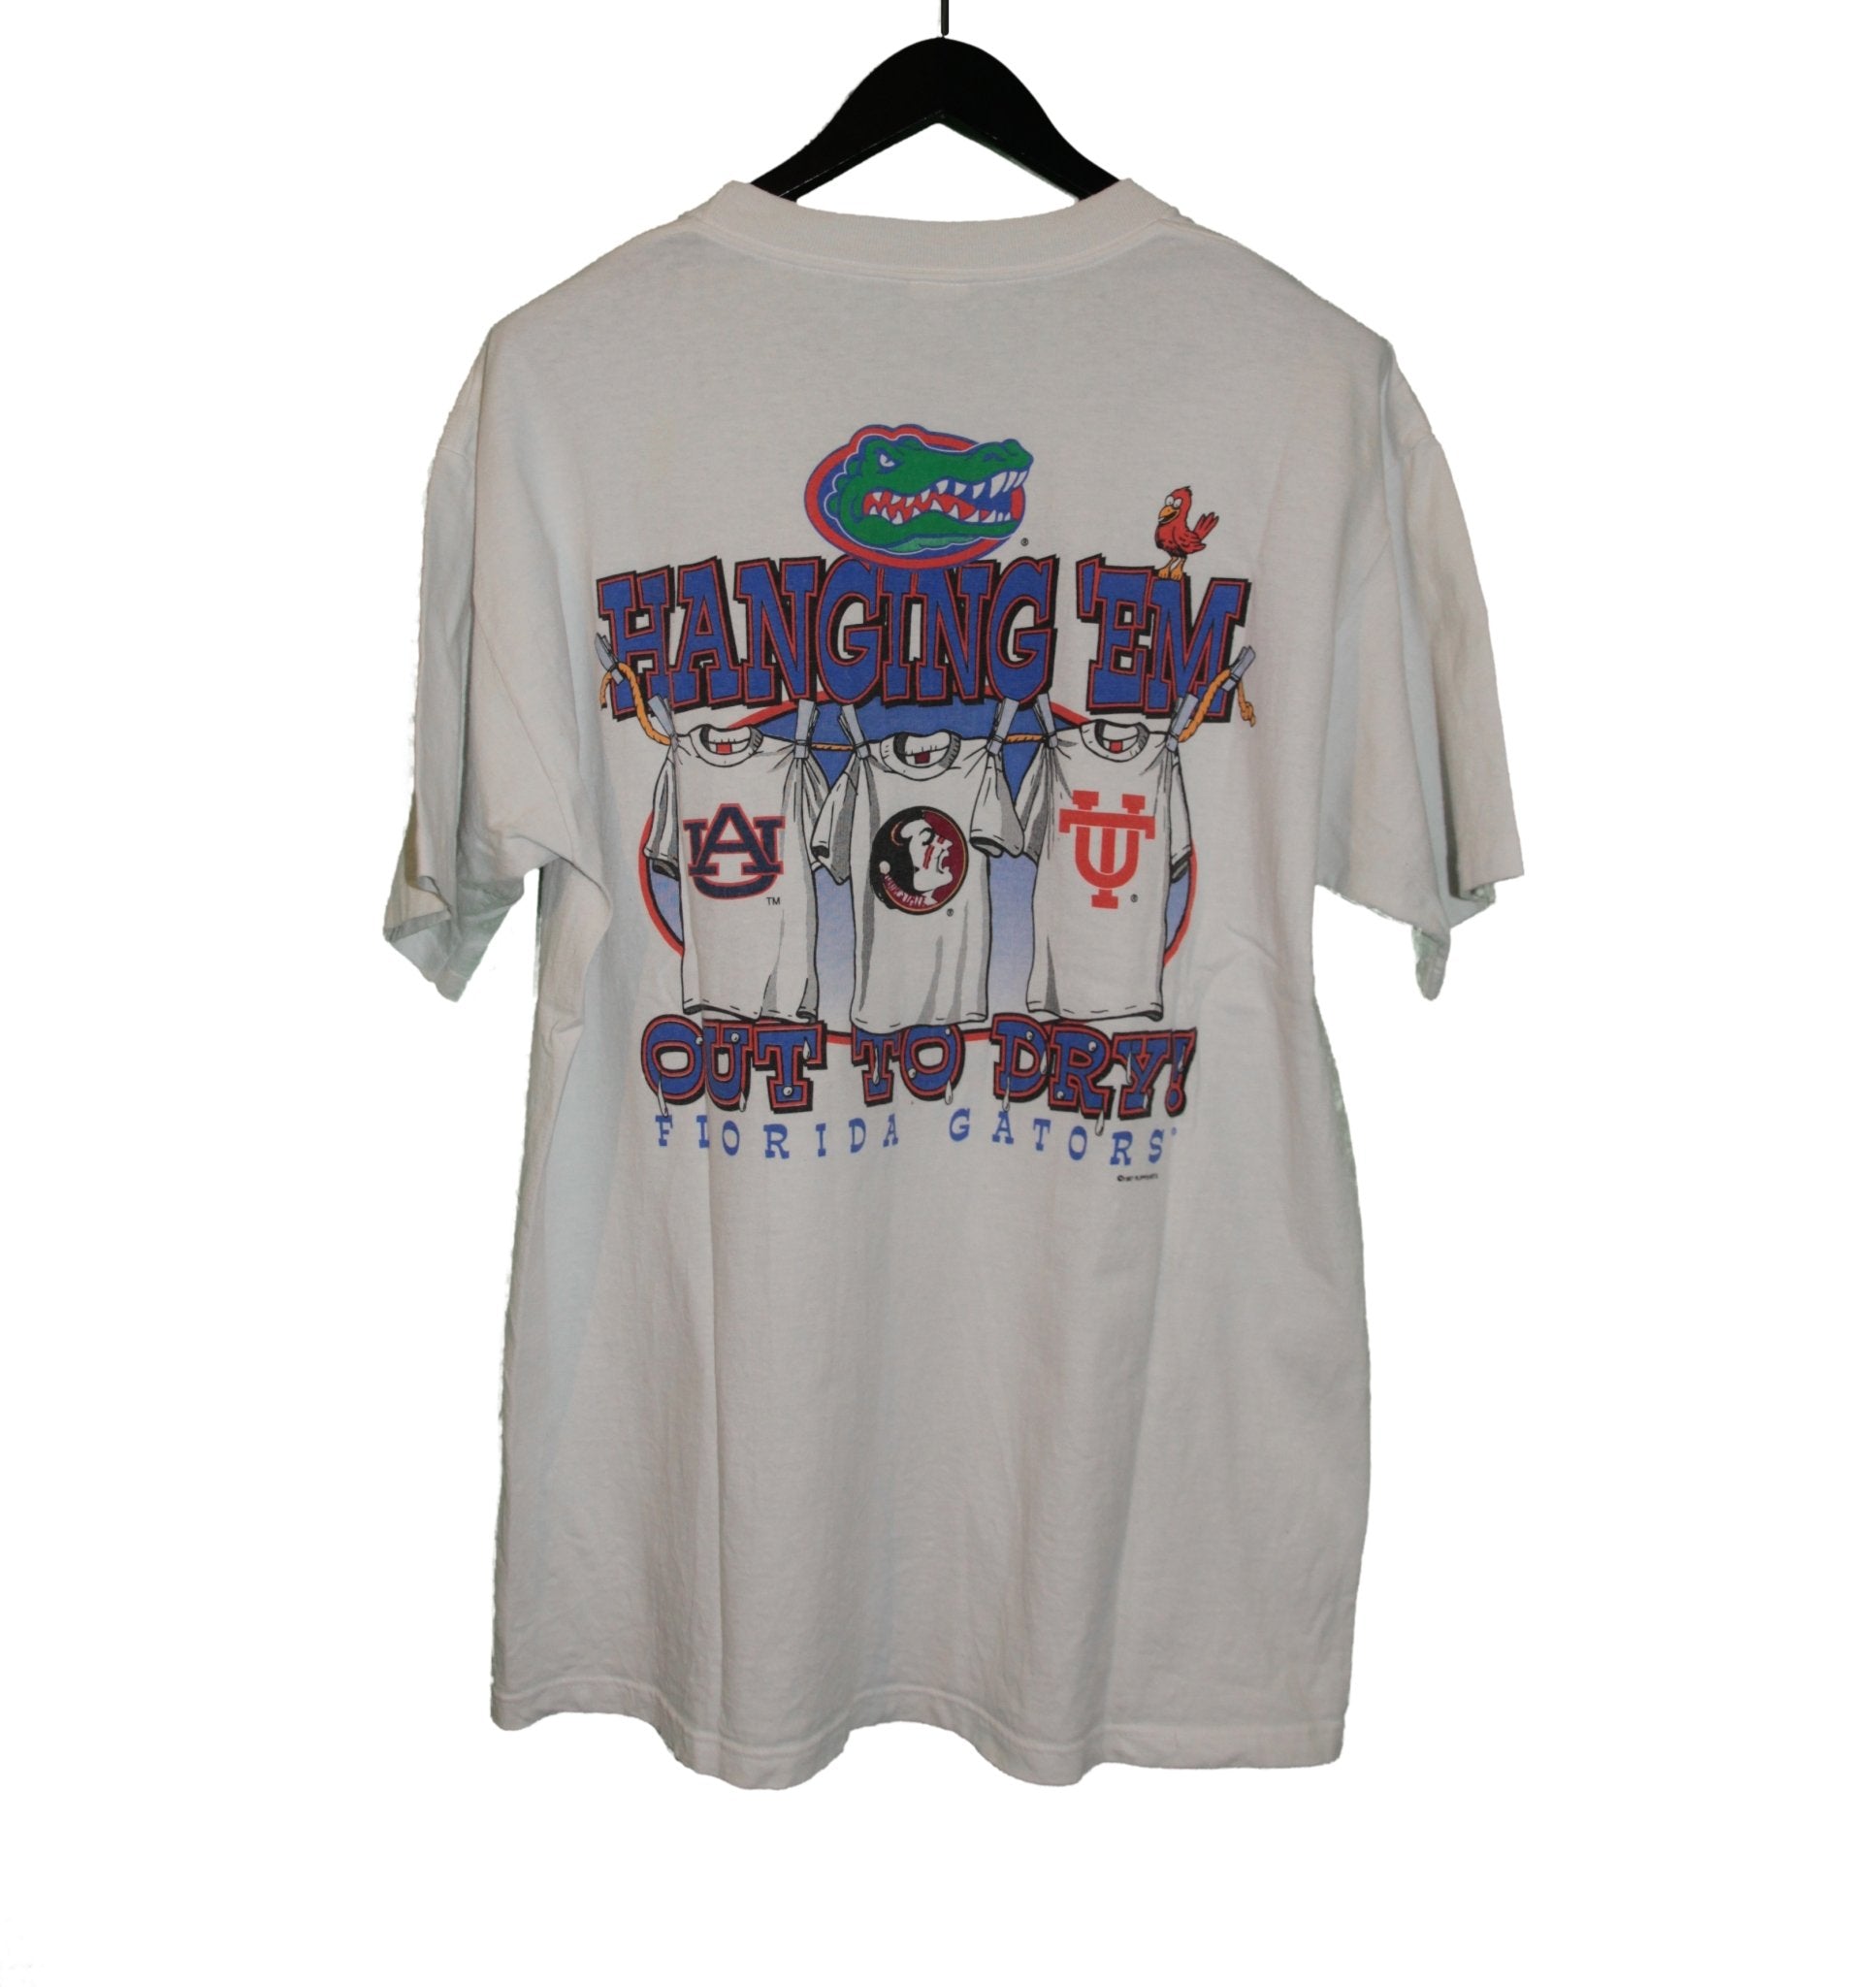 Florida Gators 1997 Shirt - Faded AU